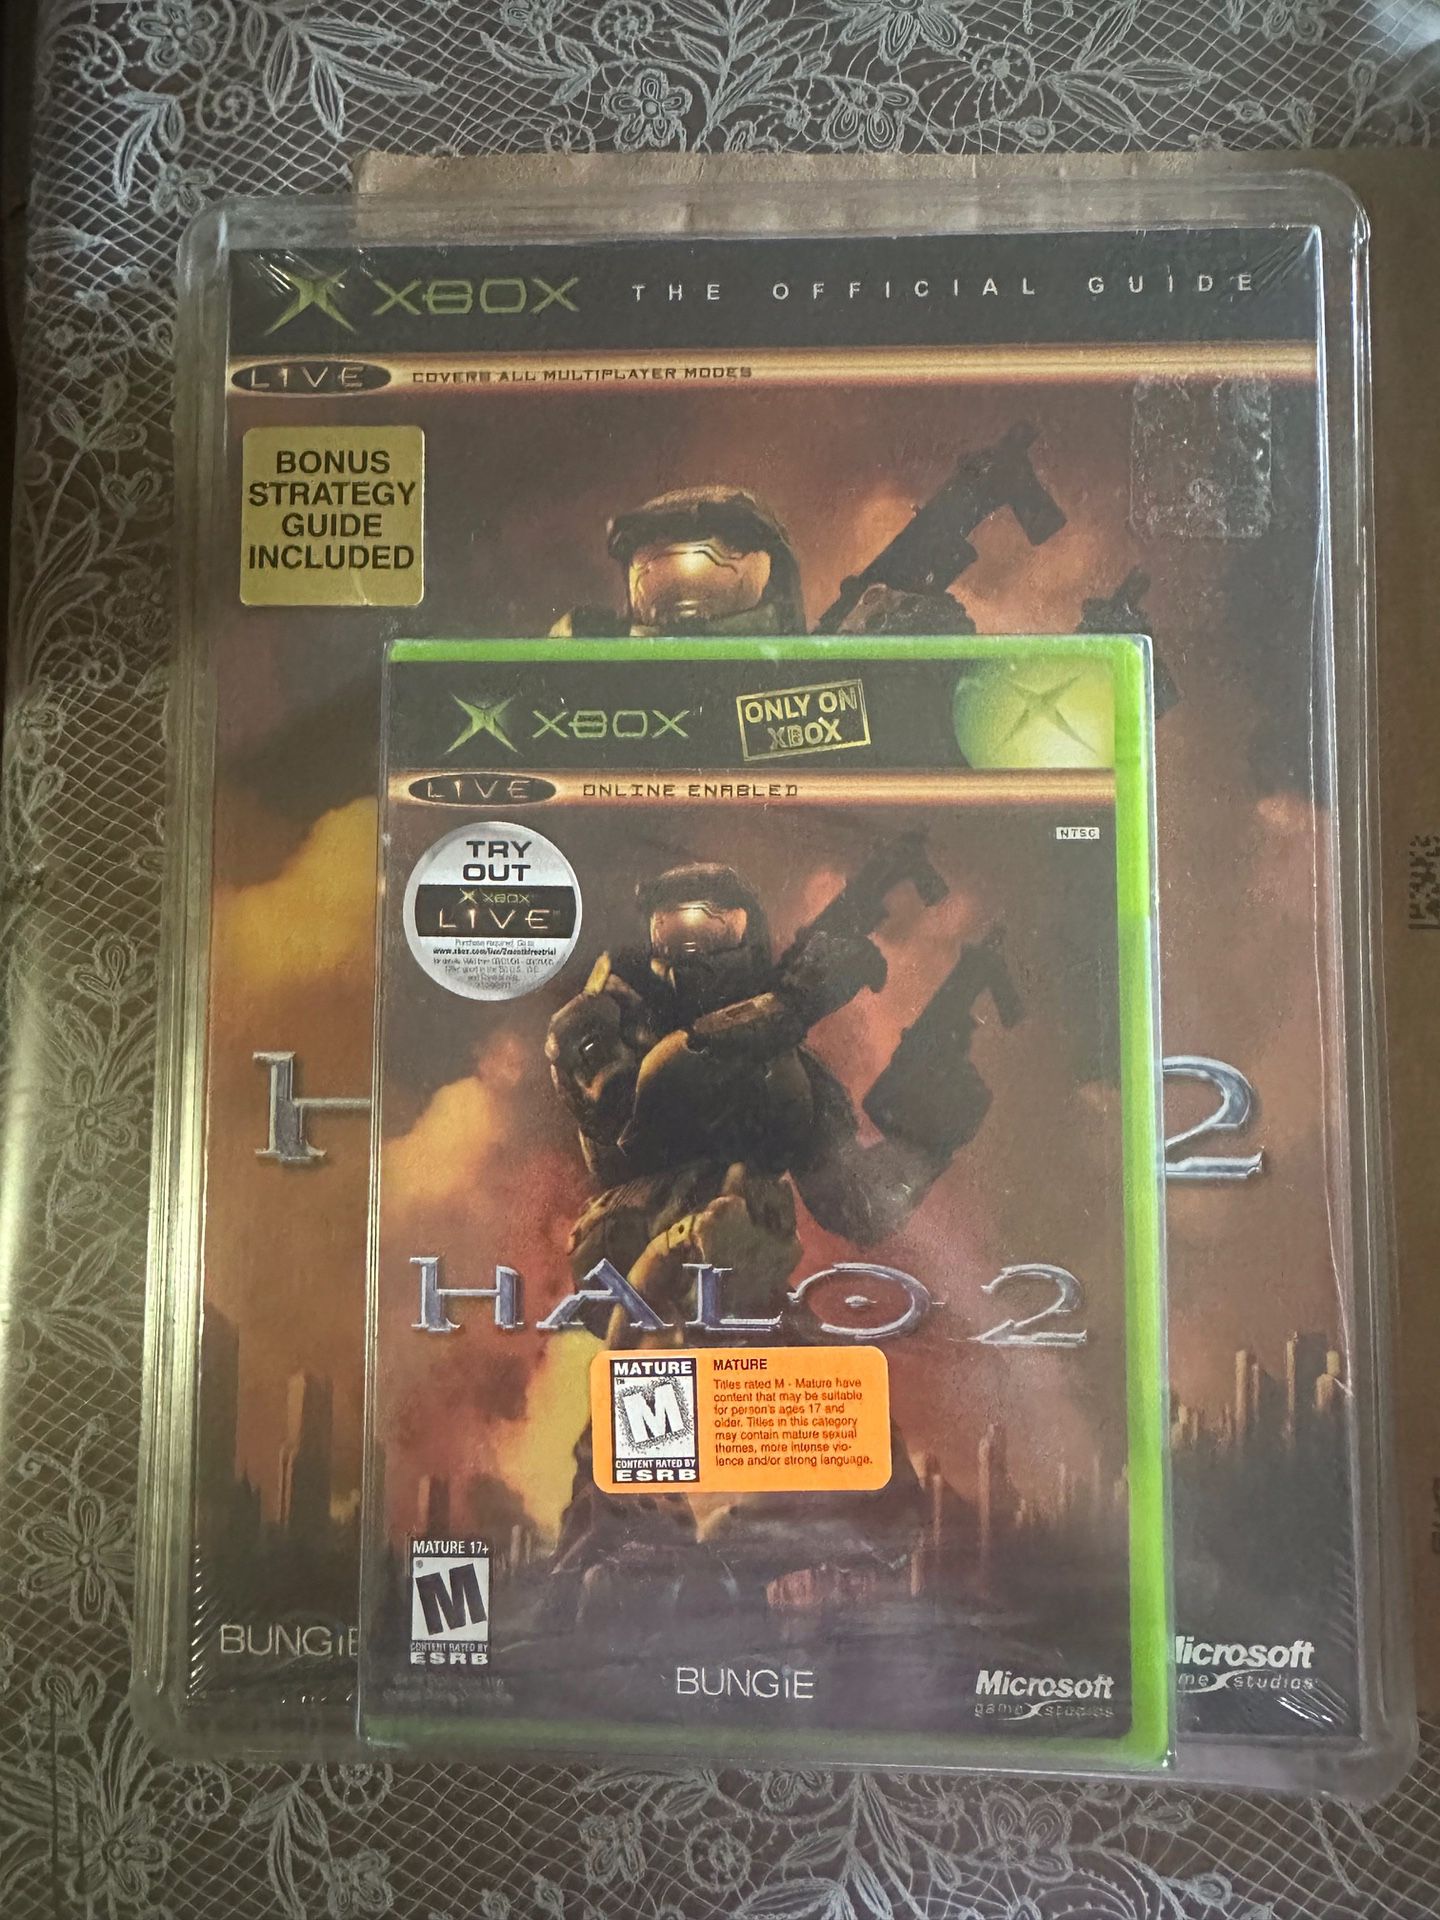 -Rare Brand New Sealed Halo 2 Blister Pack-